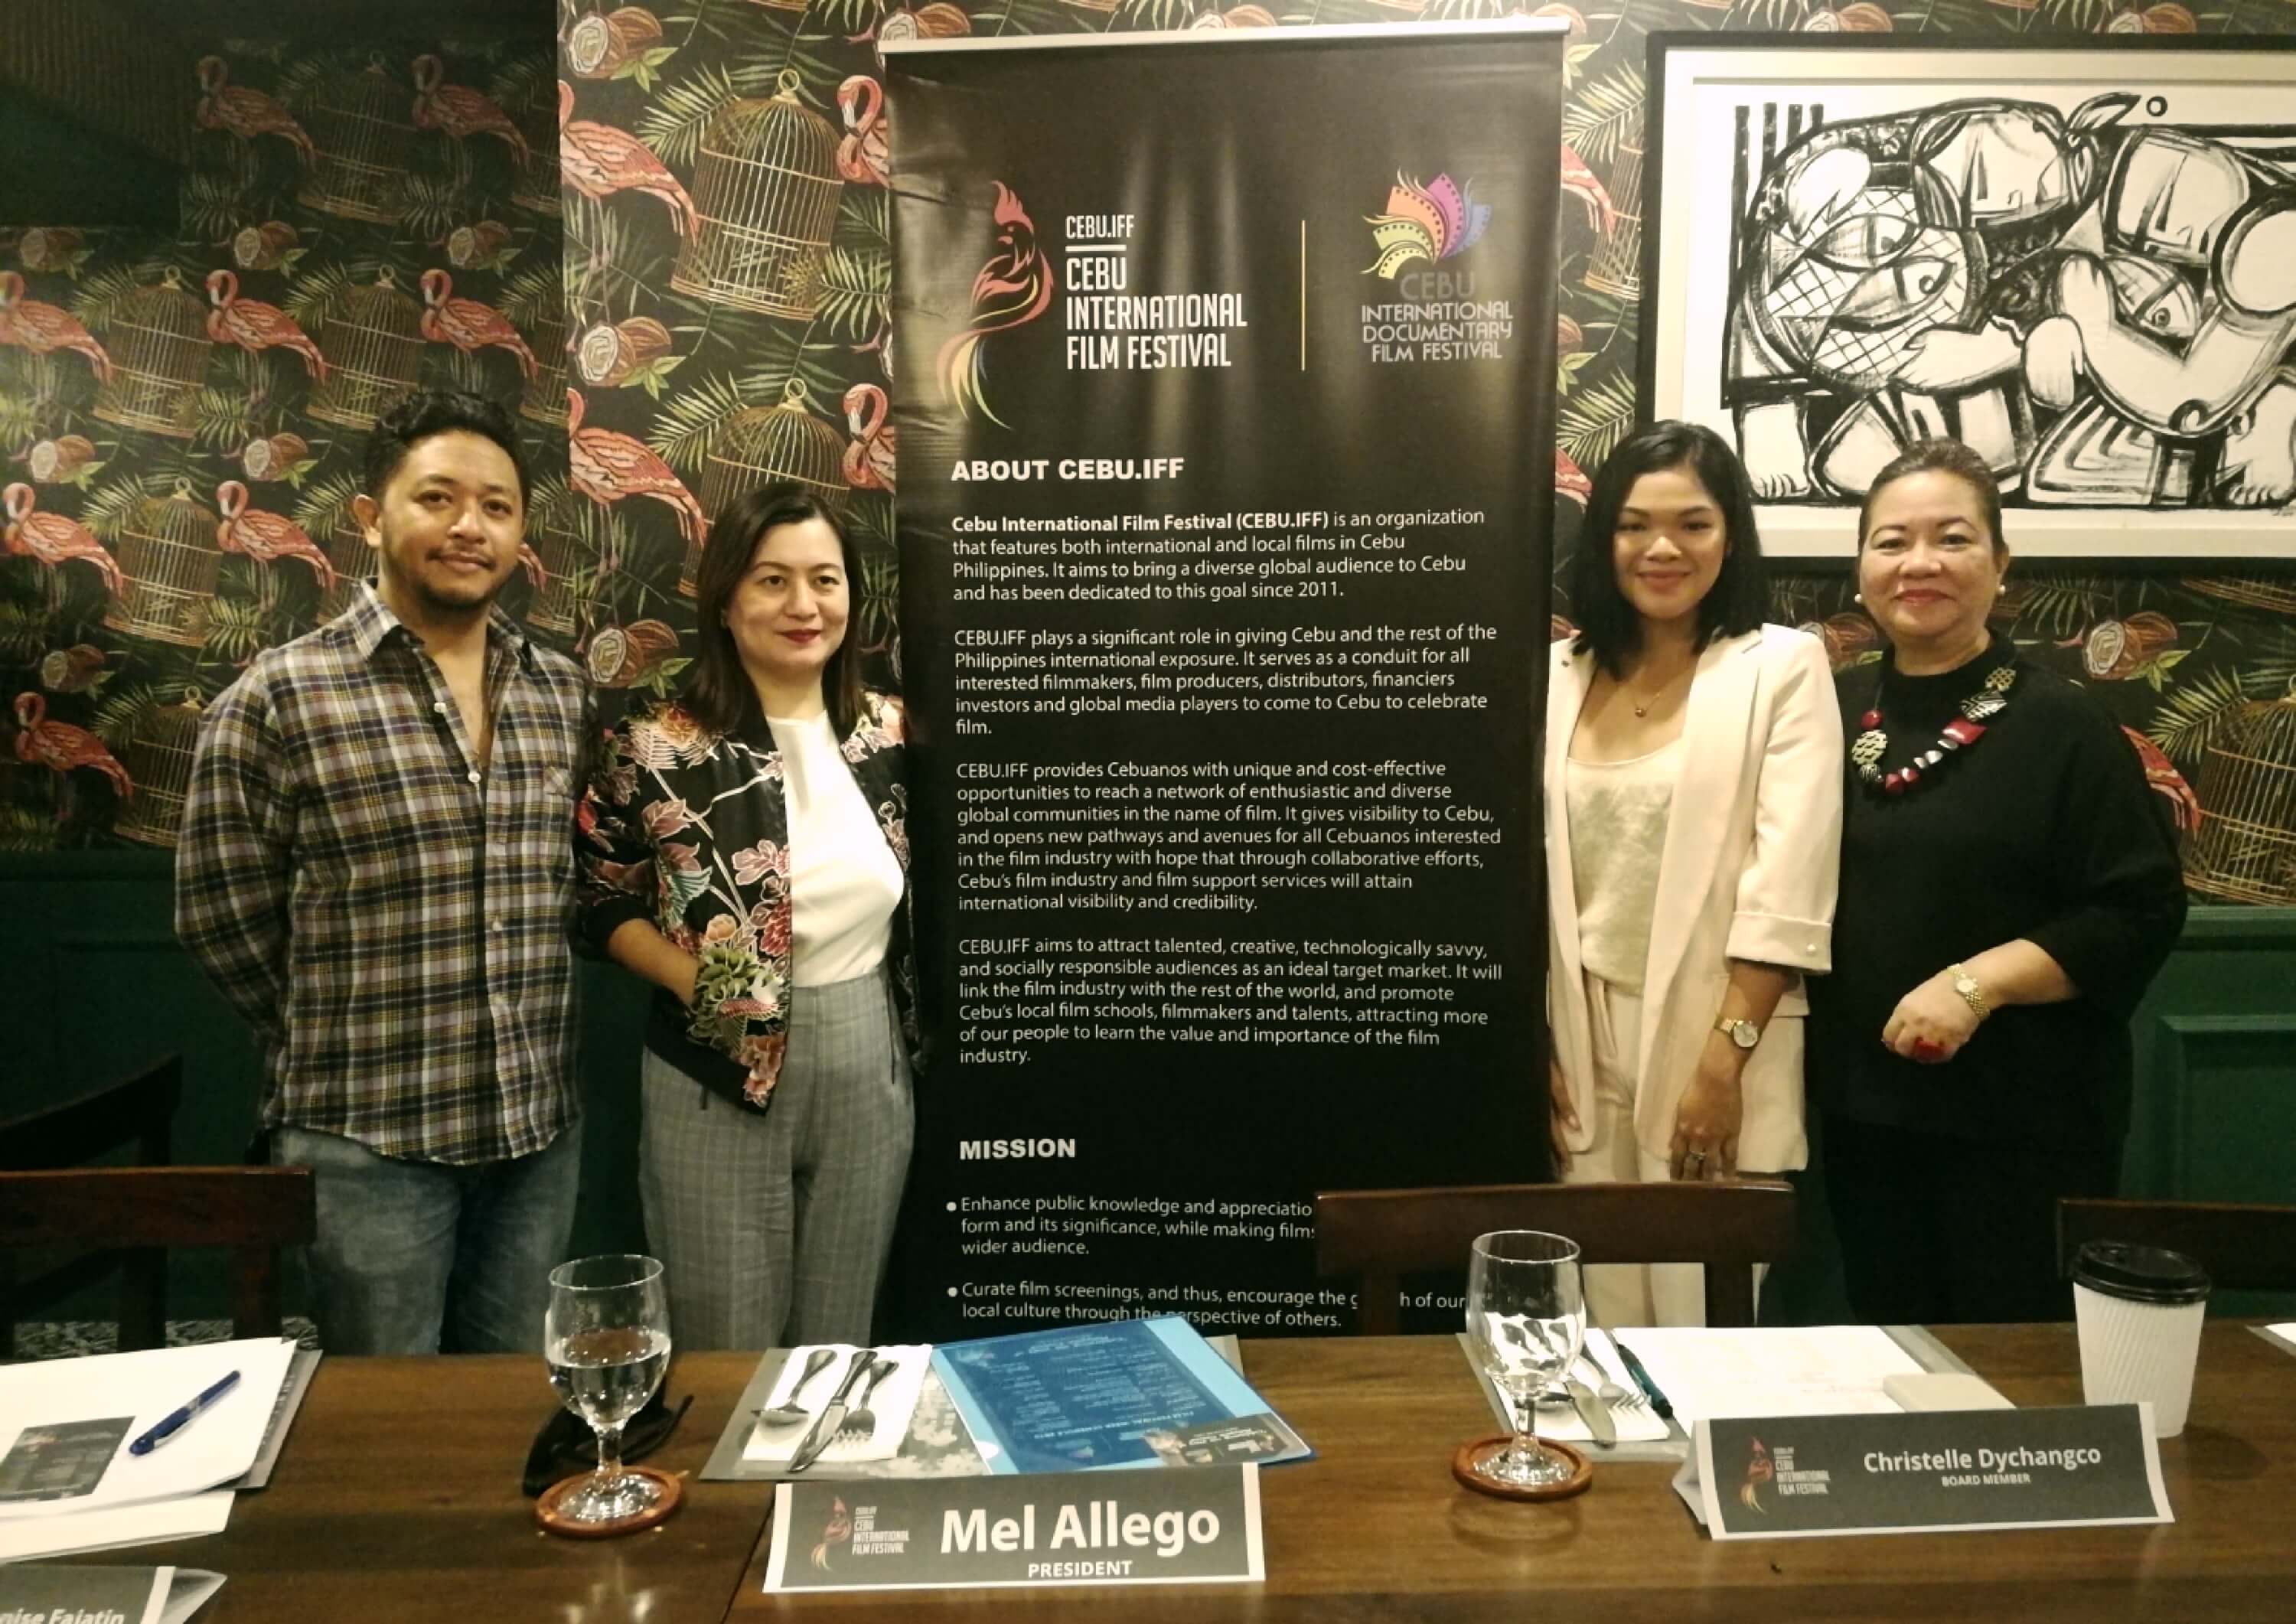 Cebu International Film Festival (Cebu.IFF)